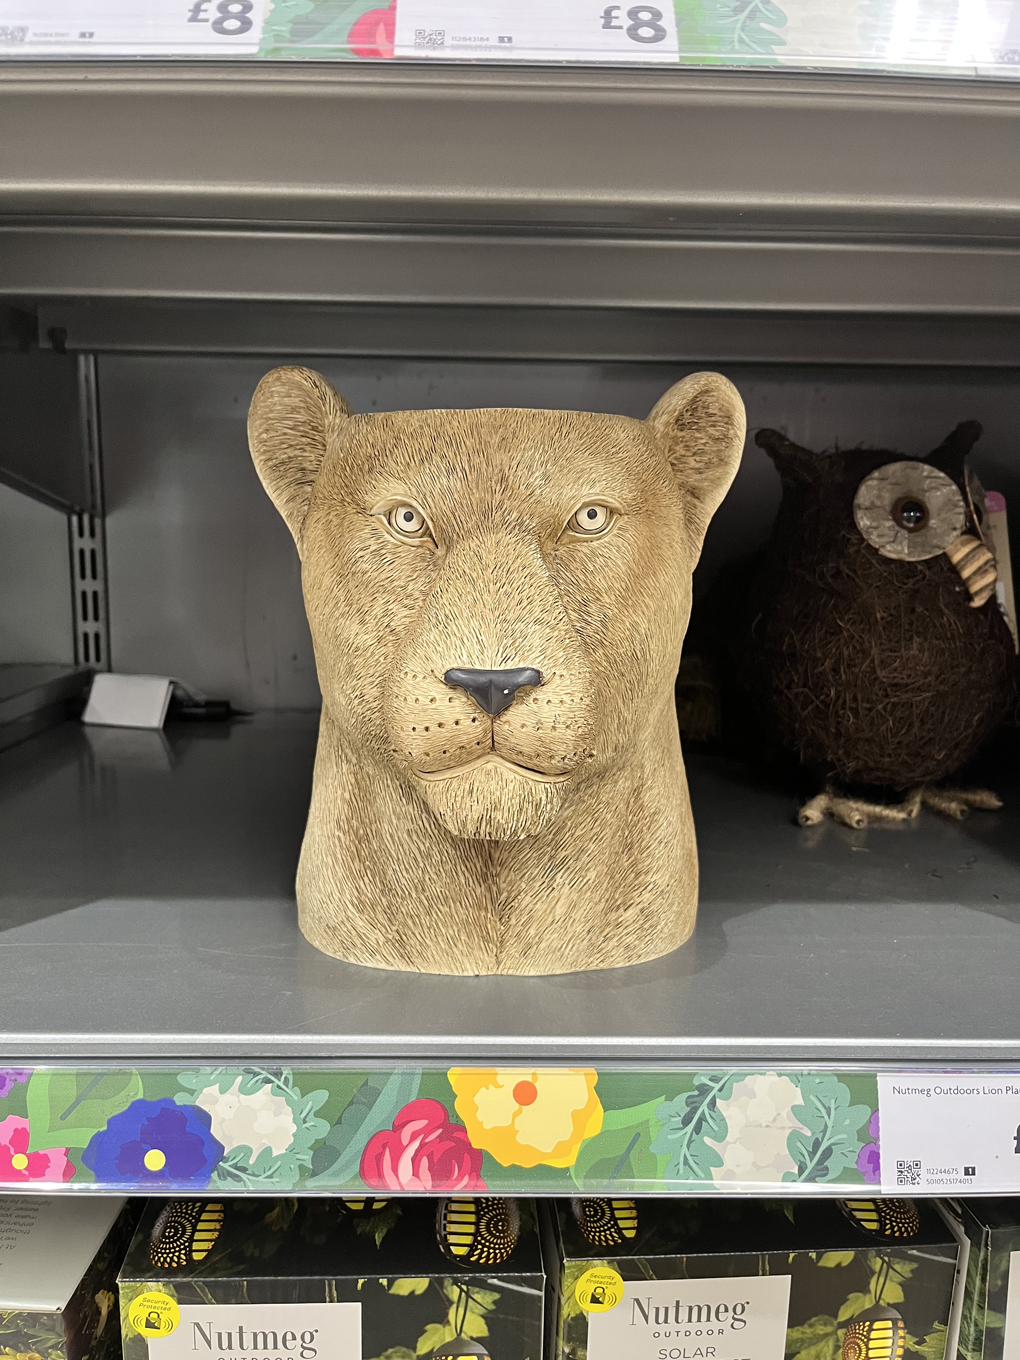 A plastic plant pot in the shape of a lion’s head sat on a supermarket shelf